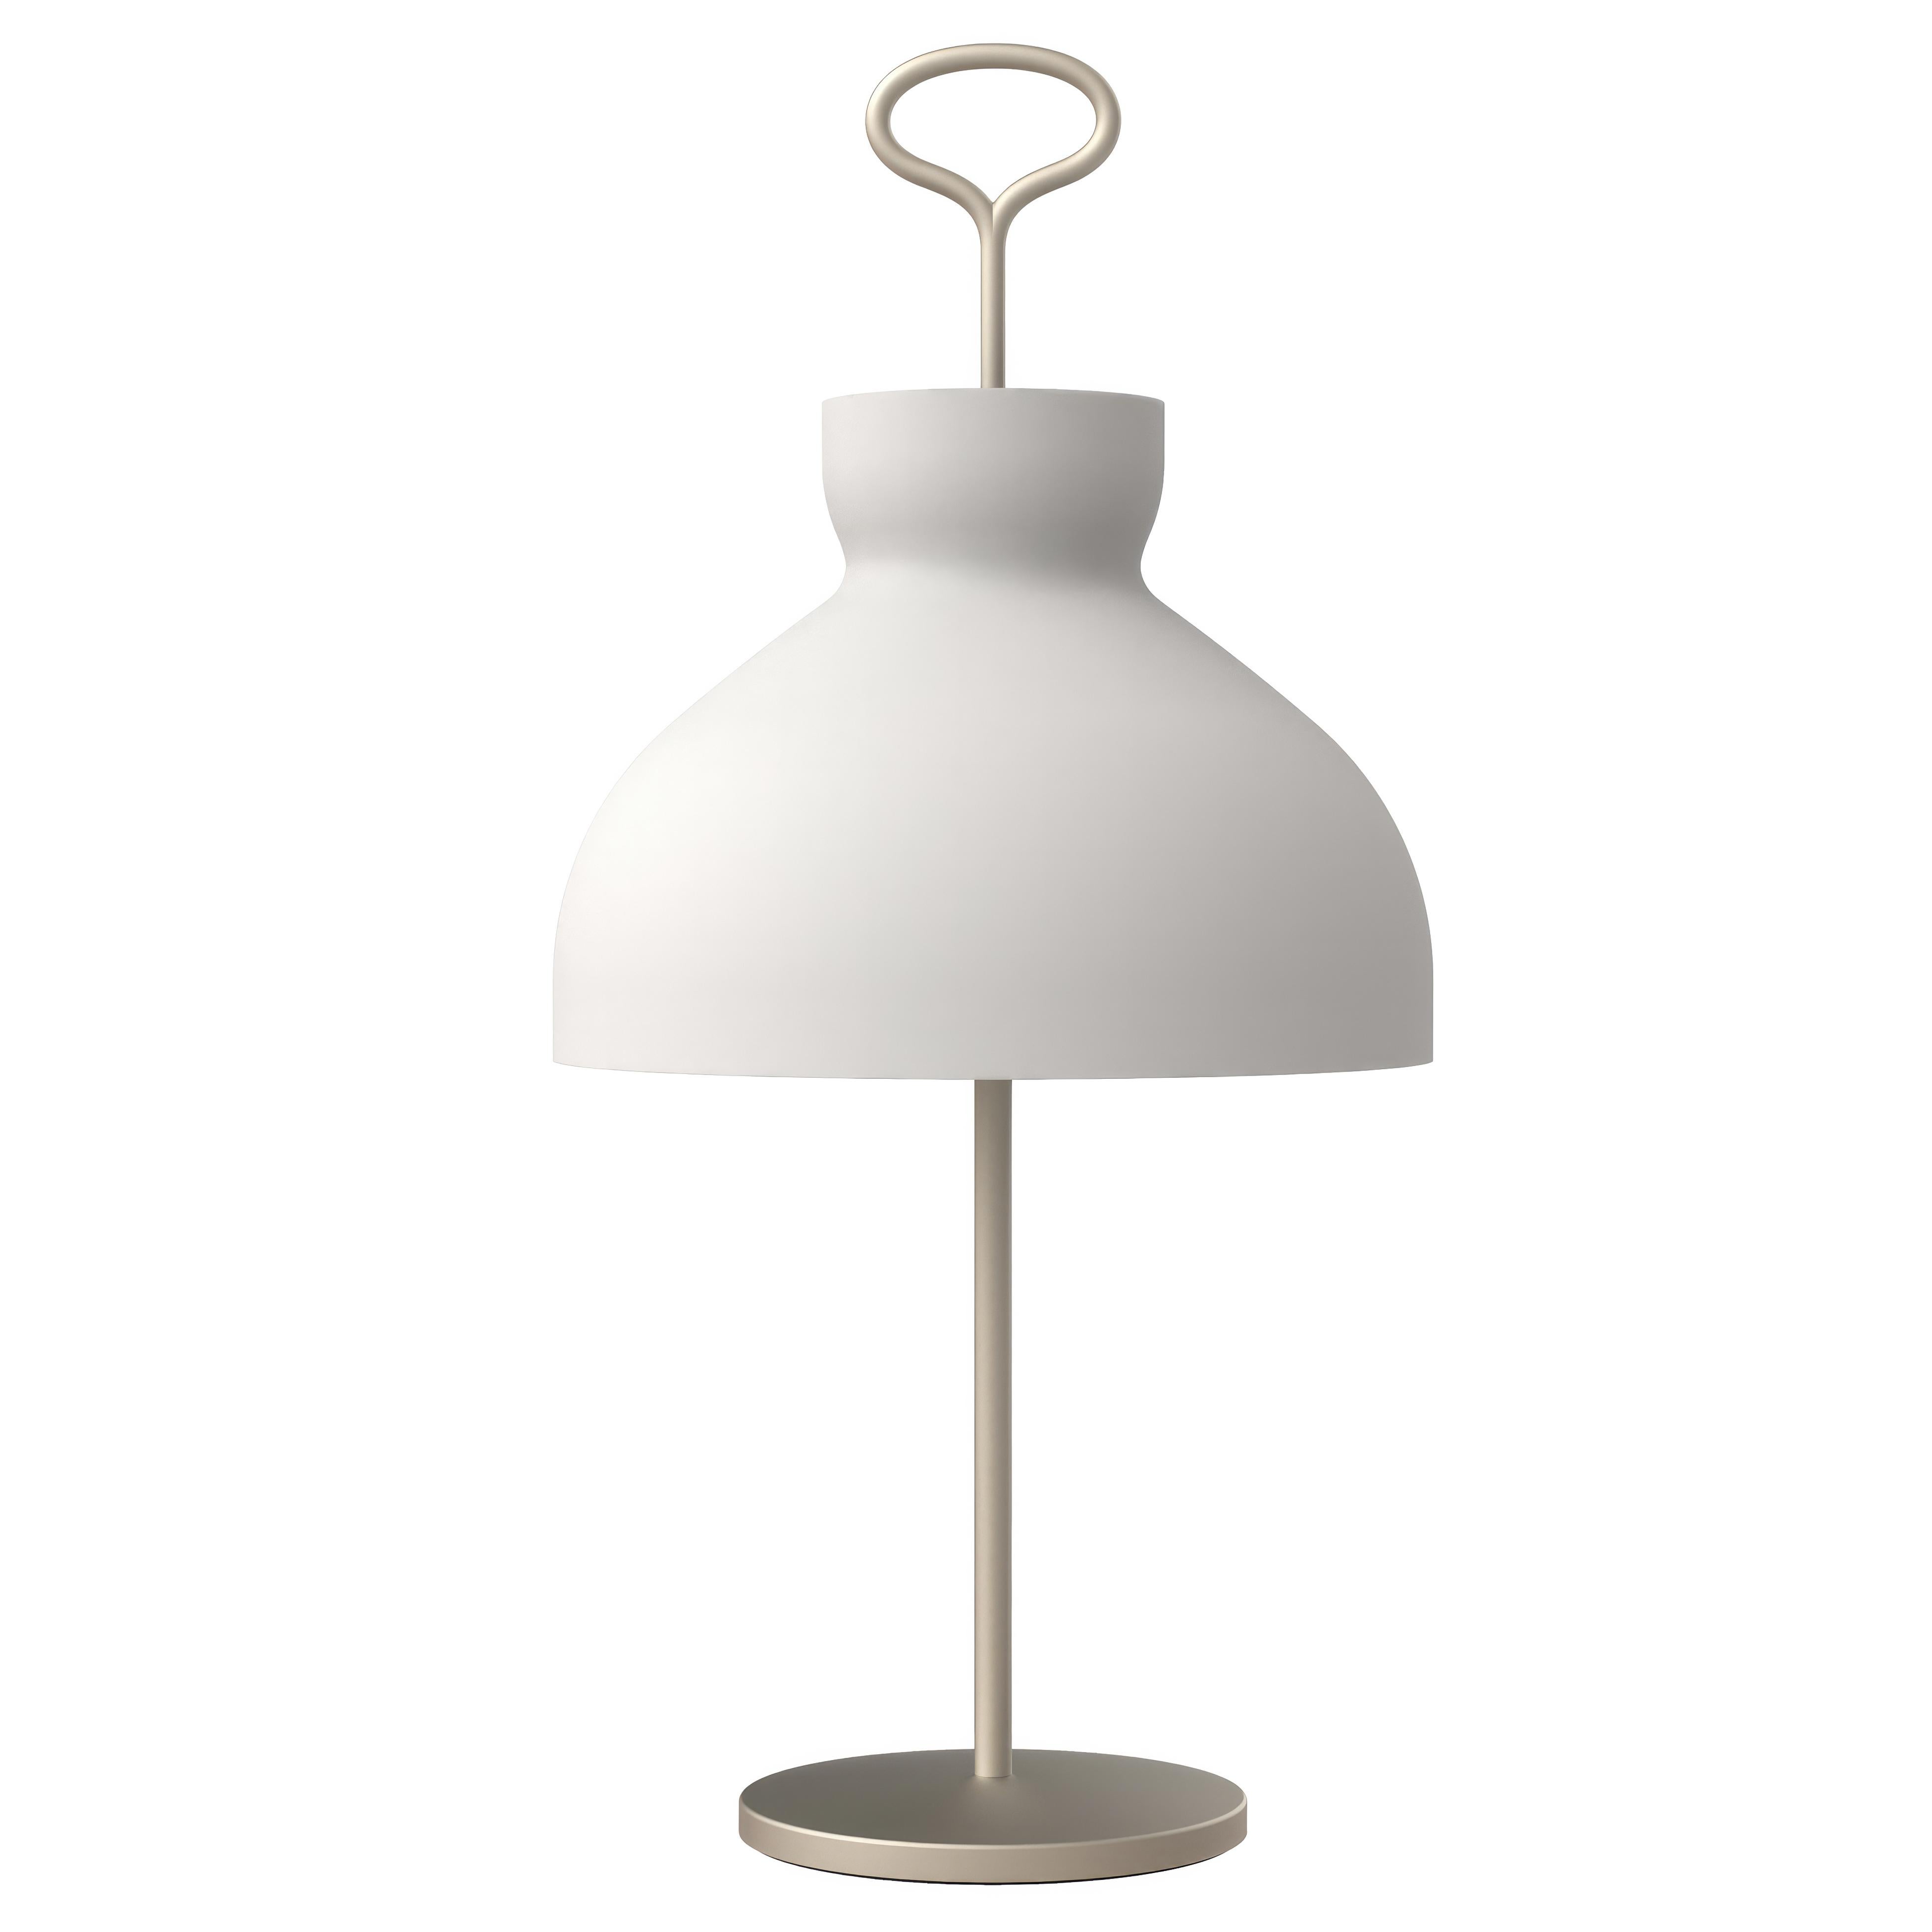 Large Ignazio Gardella 'Arenzano' Table Lamp in Satin Bronze and Glass For Sale 2